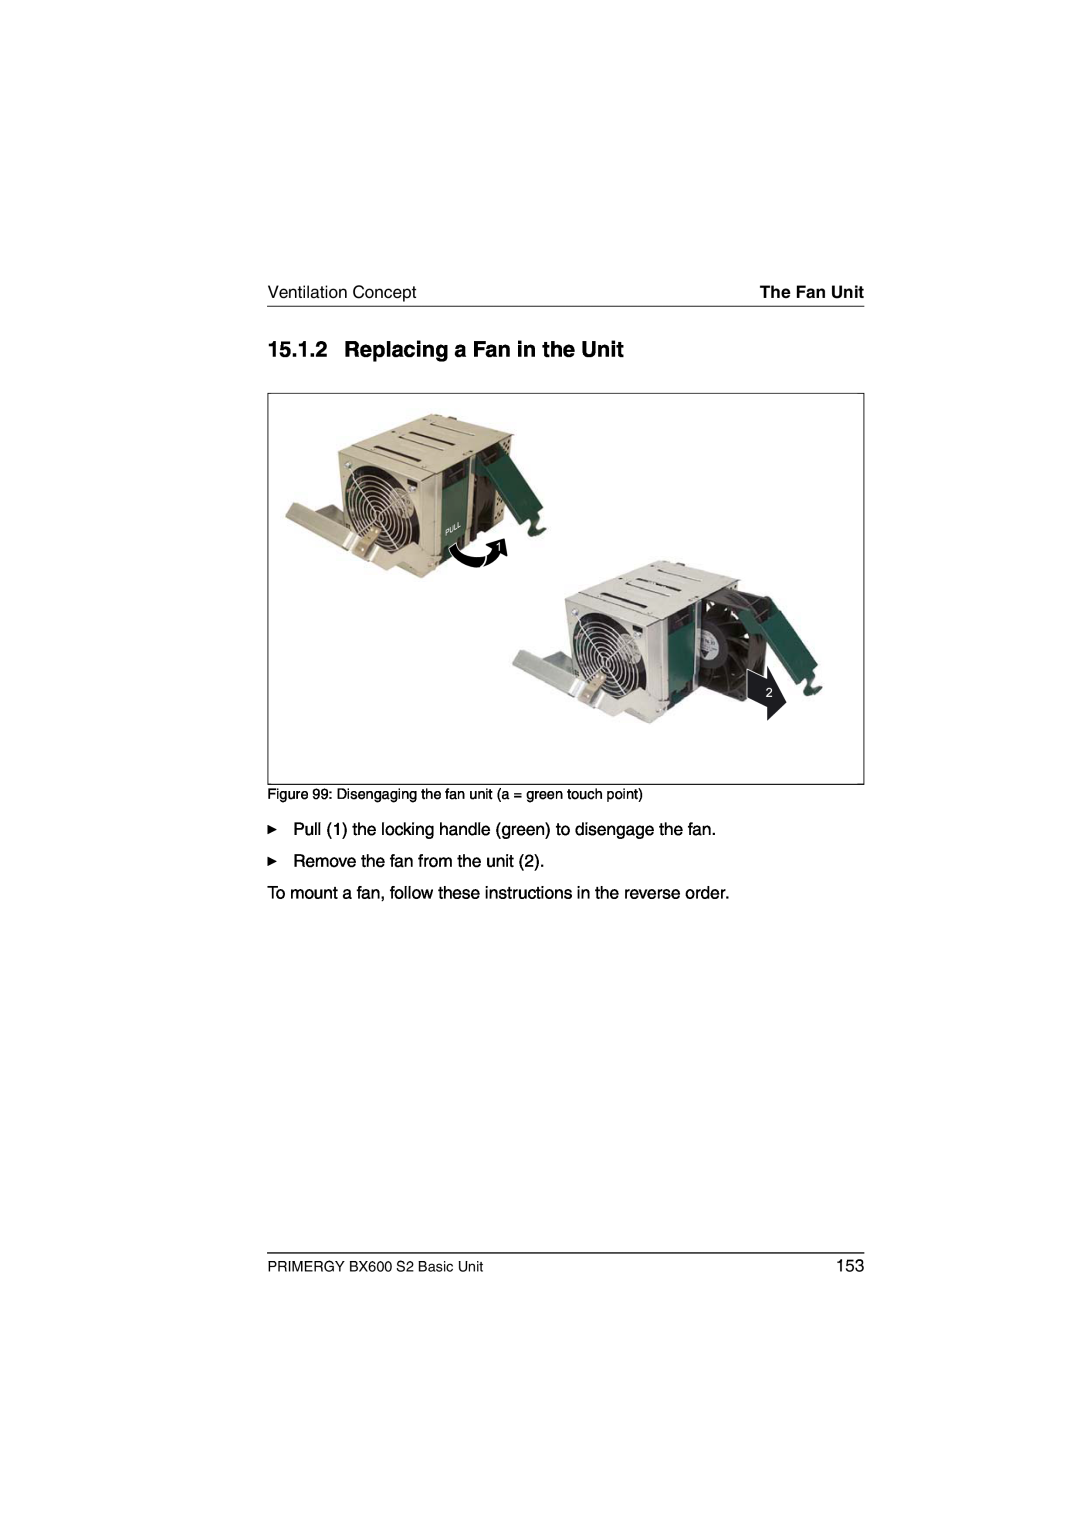 Fujitsu manual Replacing a Fan in the Unit, Ventilation Concept, The Fan Unit, PRIMERGY BX600 S2 Basic Unit 